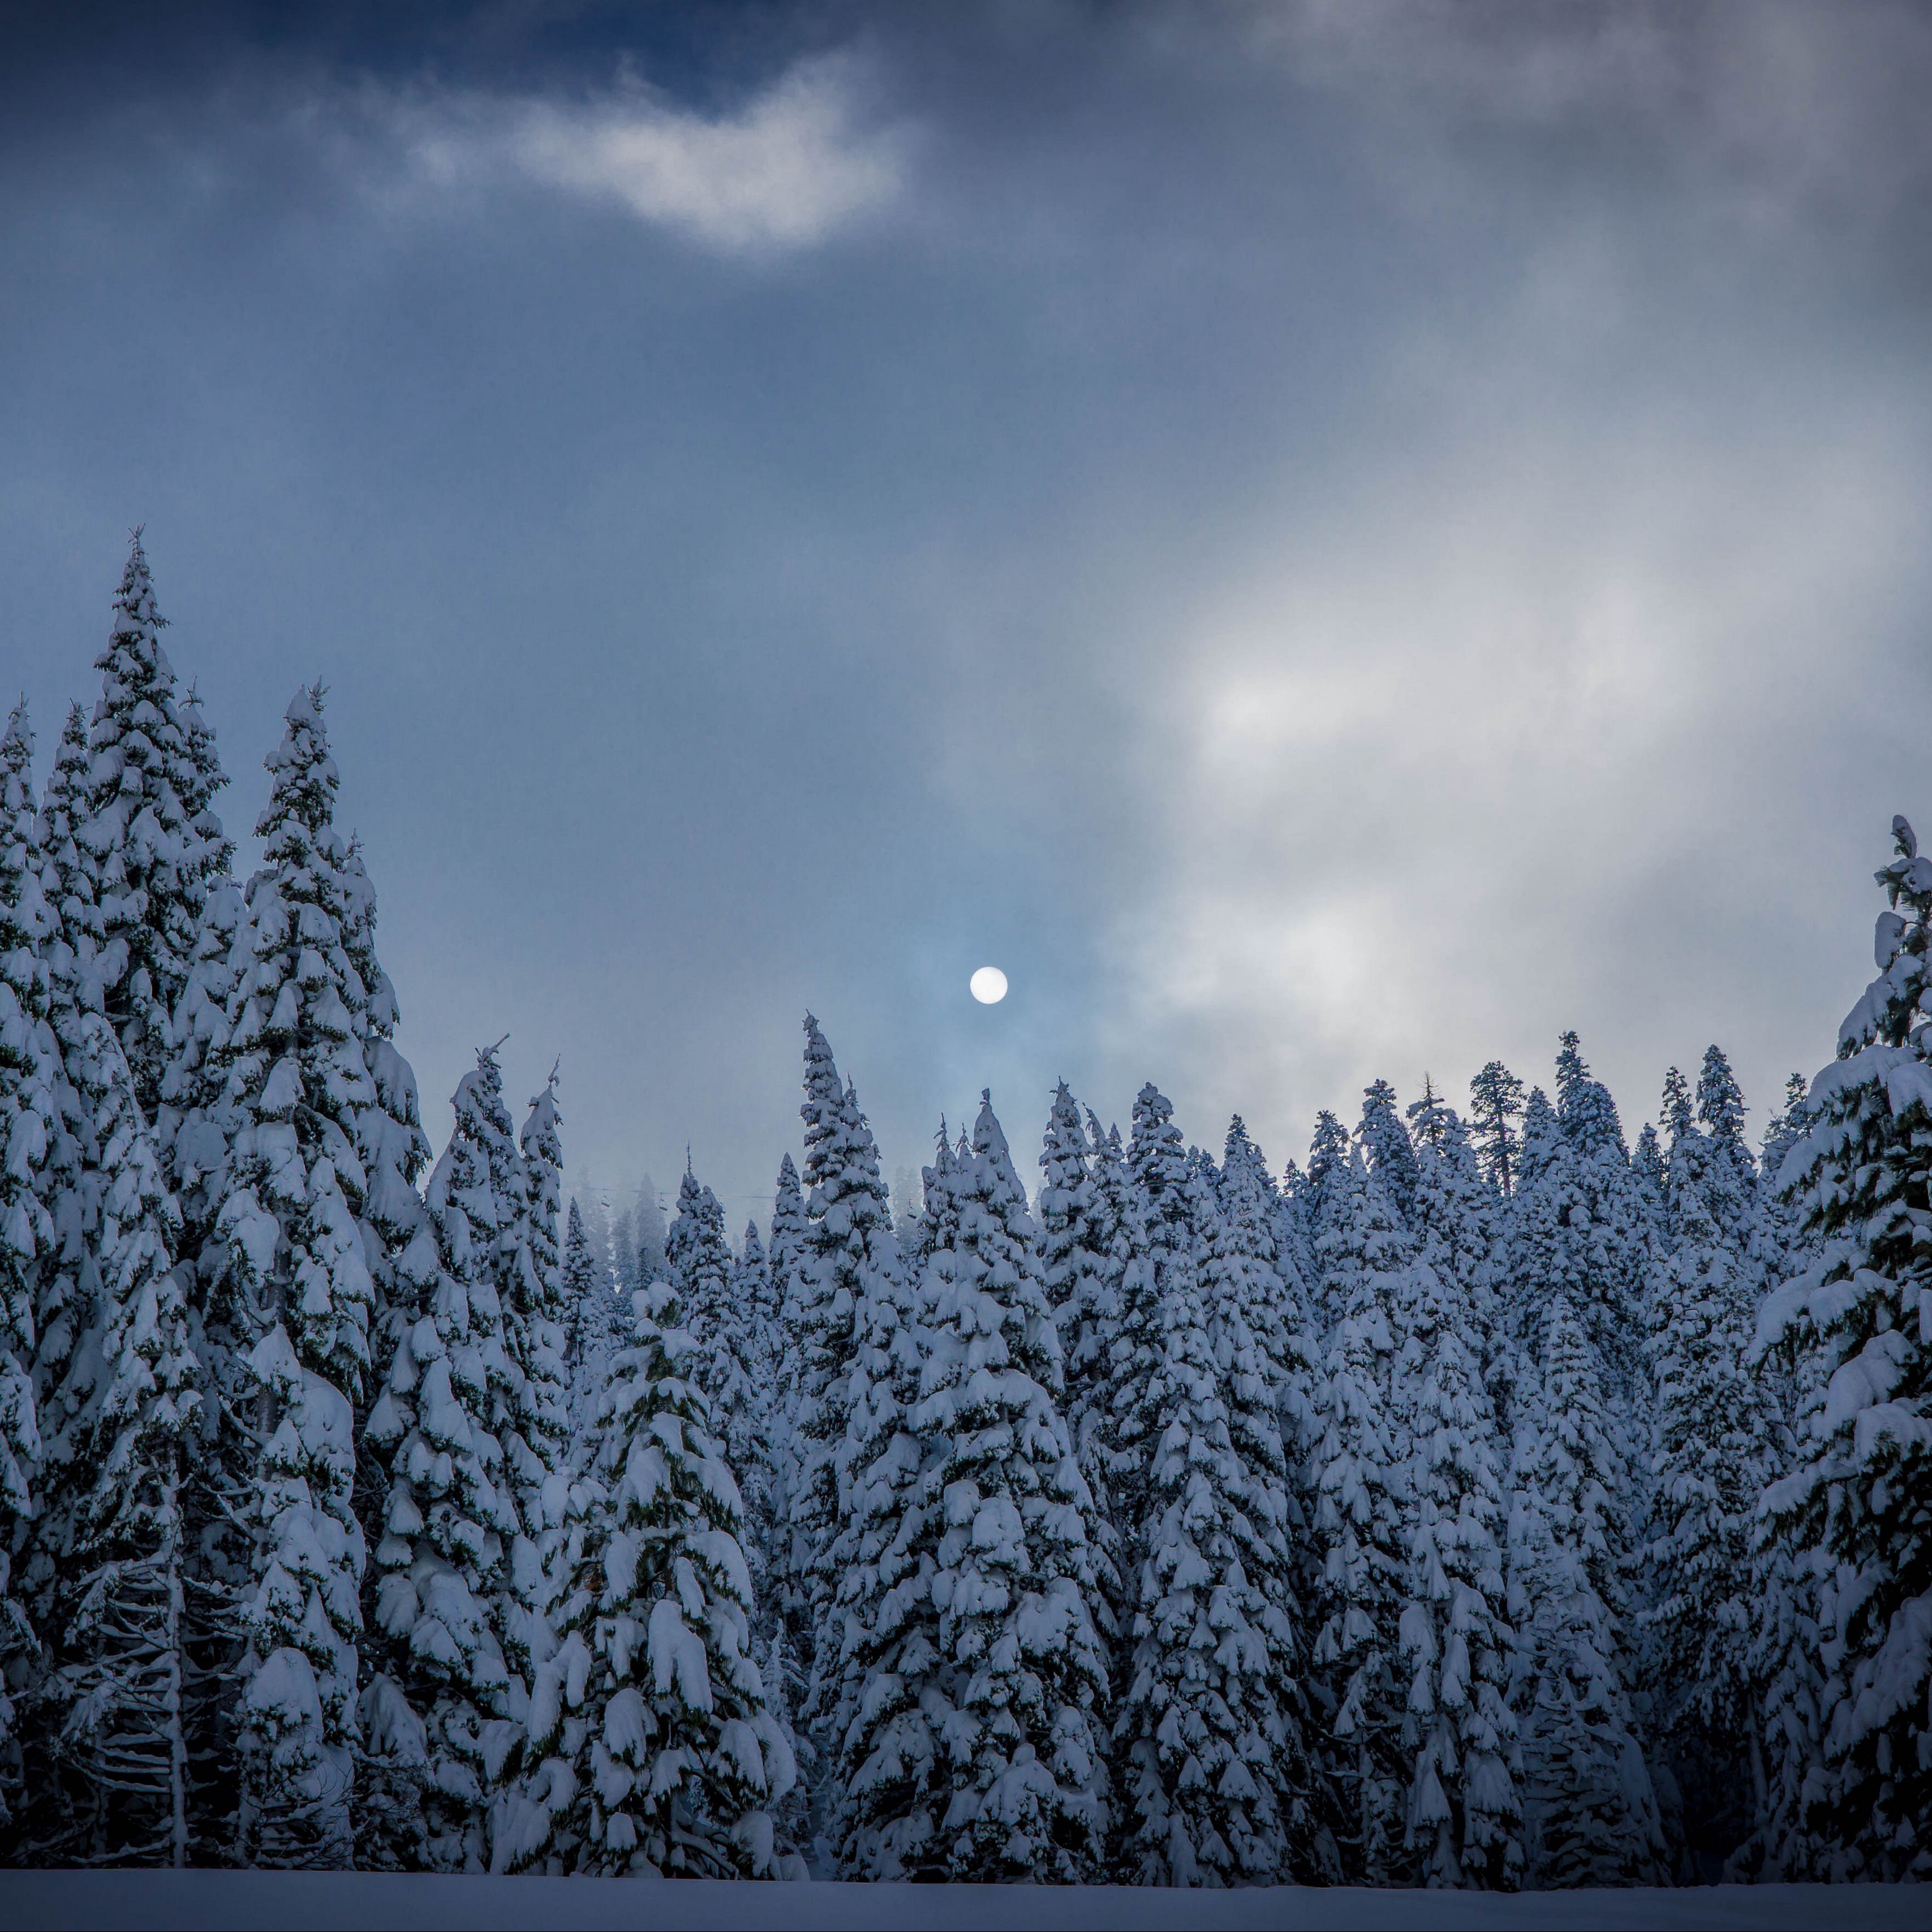 Download wallpaper 3415x3415 winter, fir, snow, forest ipad pro 12.9 retina for parallax HD background